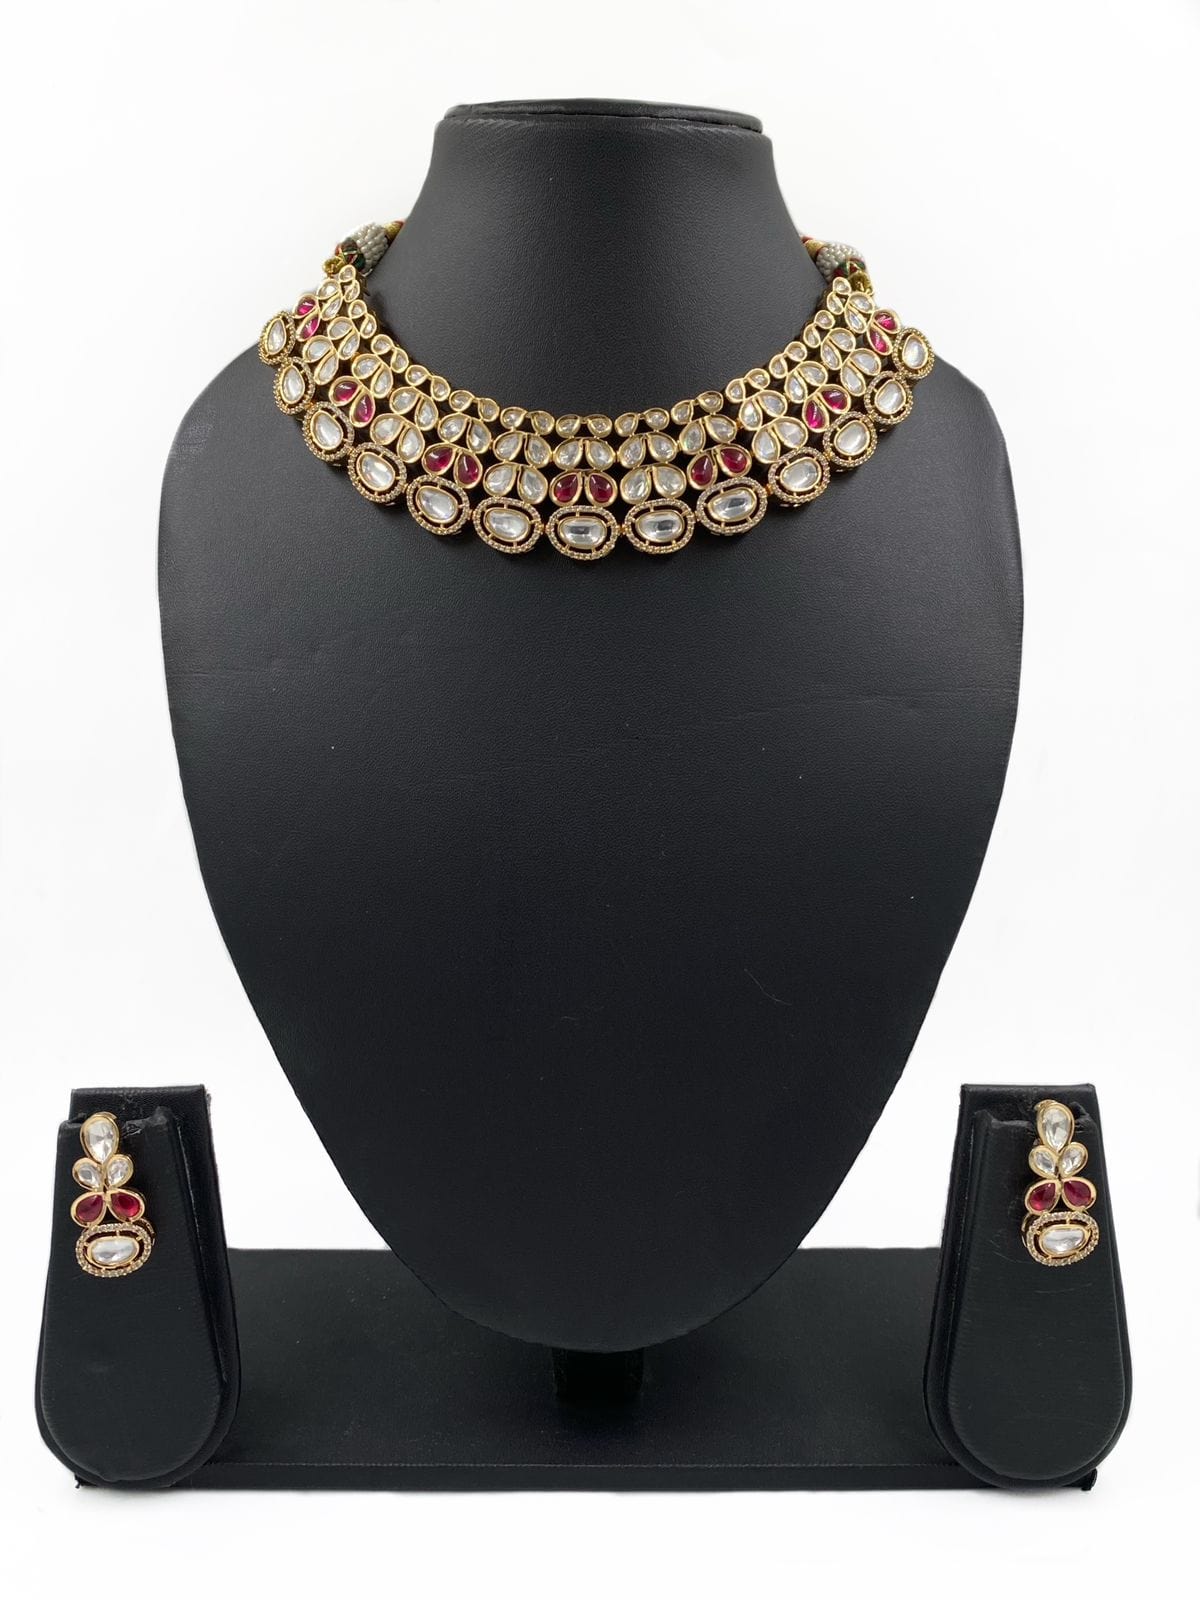 Parineeti Ruby Polki Kundan Wedding Choker Necklace Set By Gehna Shop Bridal Necklace Sets